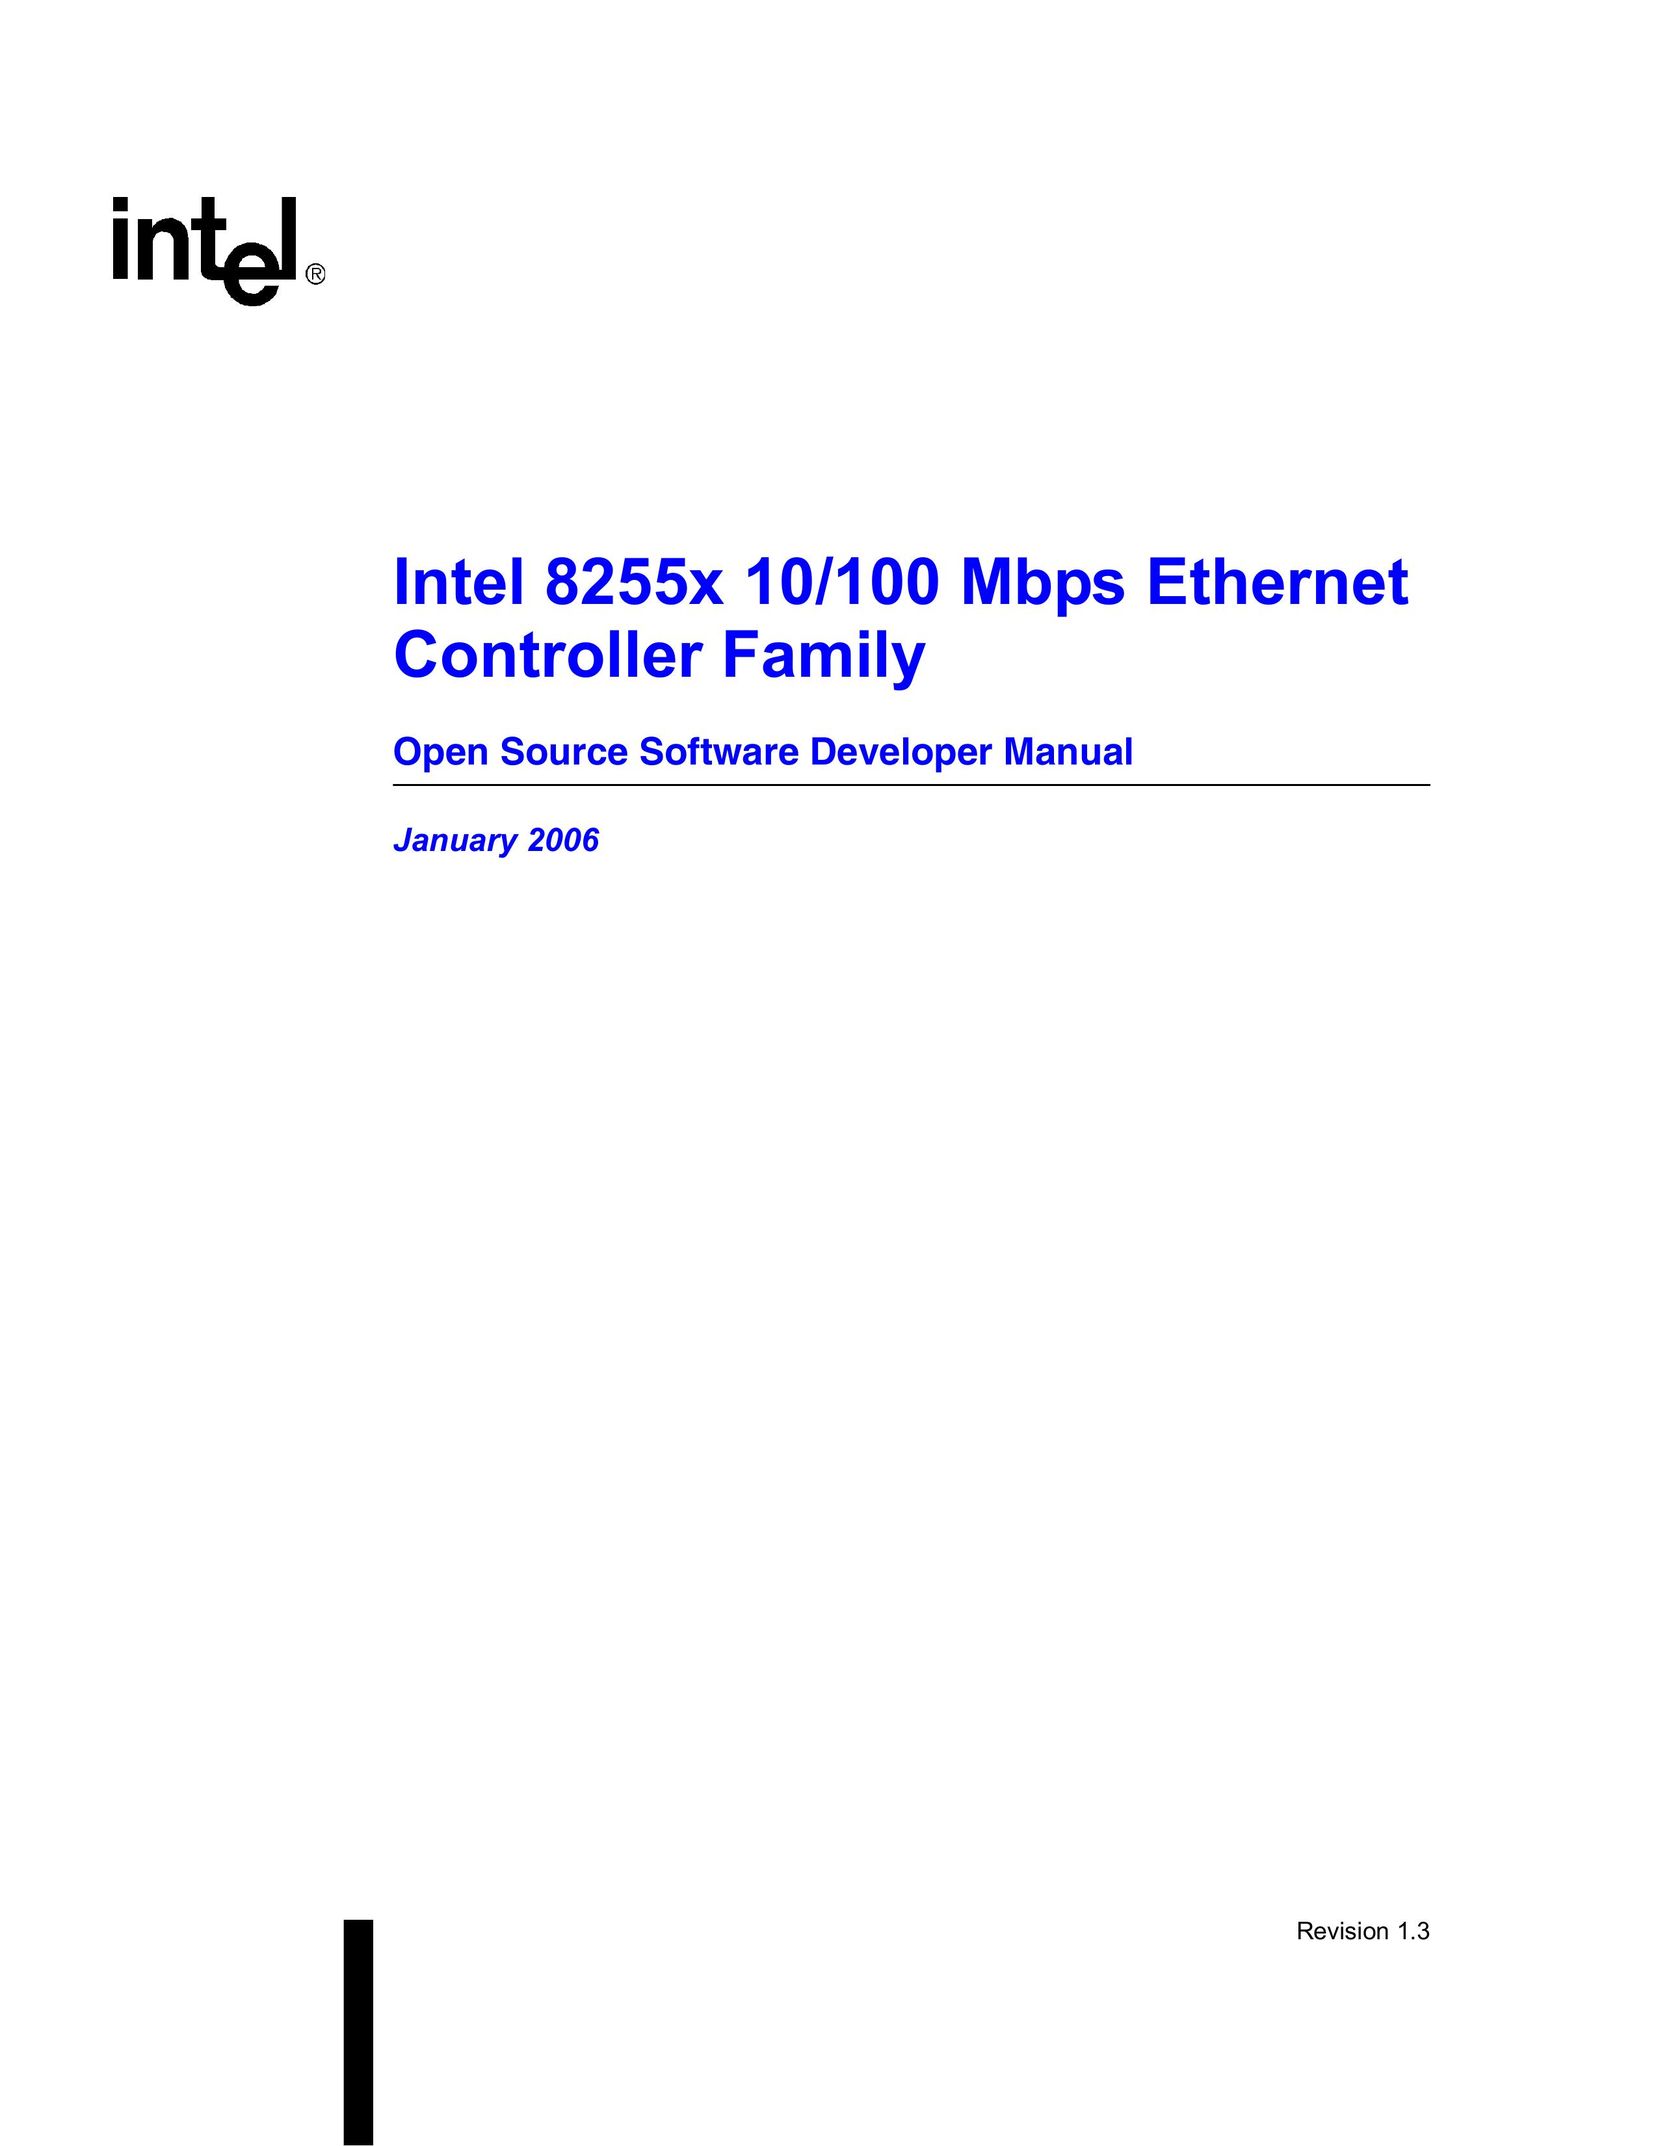 Intel 82557 Switch User Manual